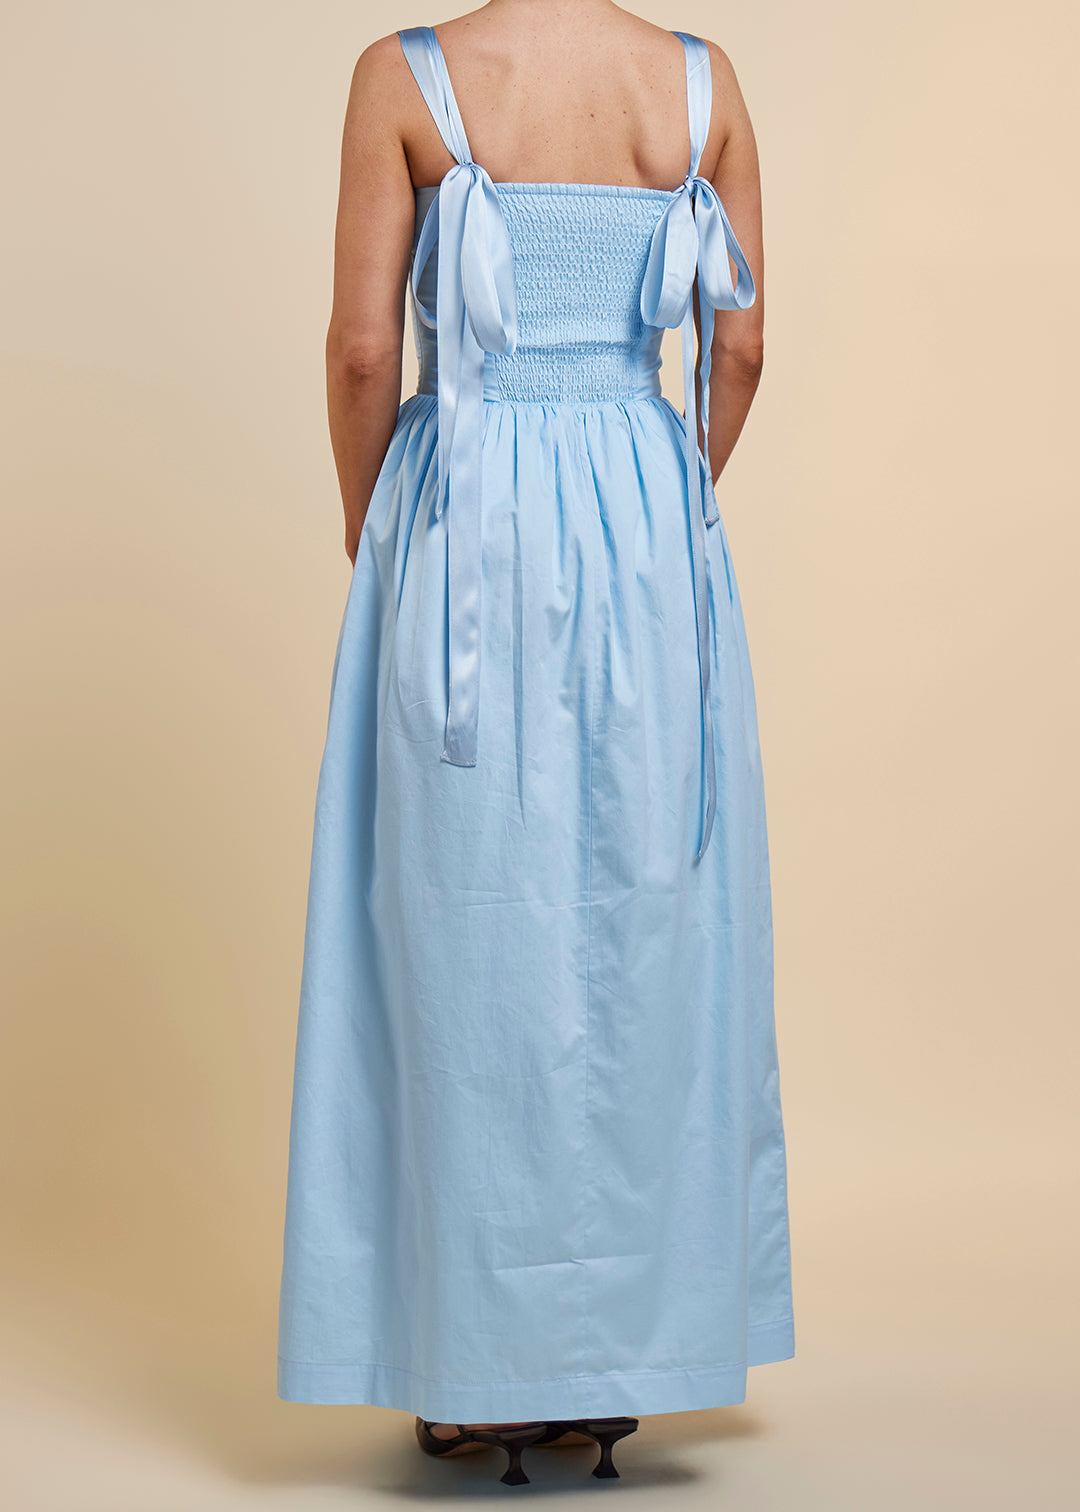 Elin Maxi Dress in Baby Blue